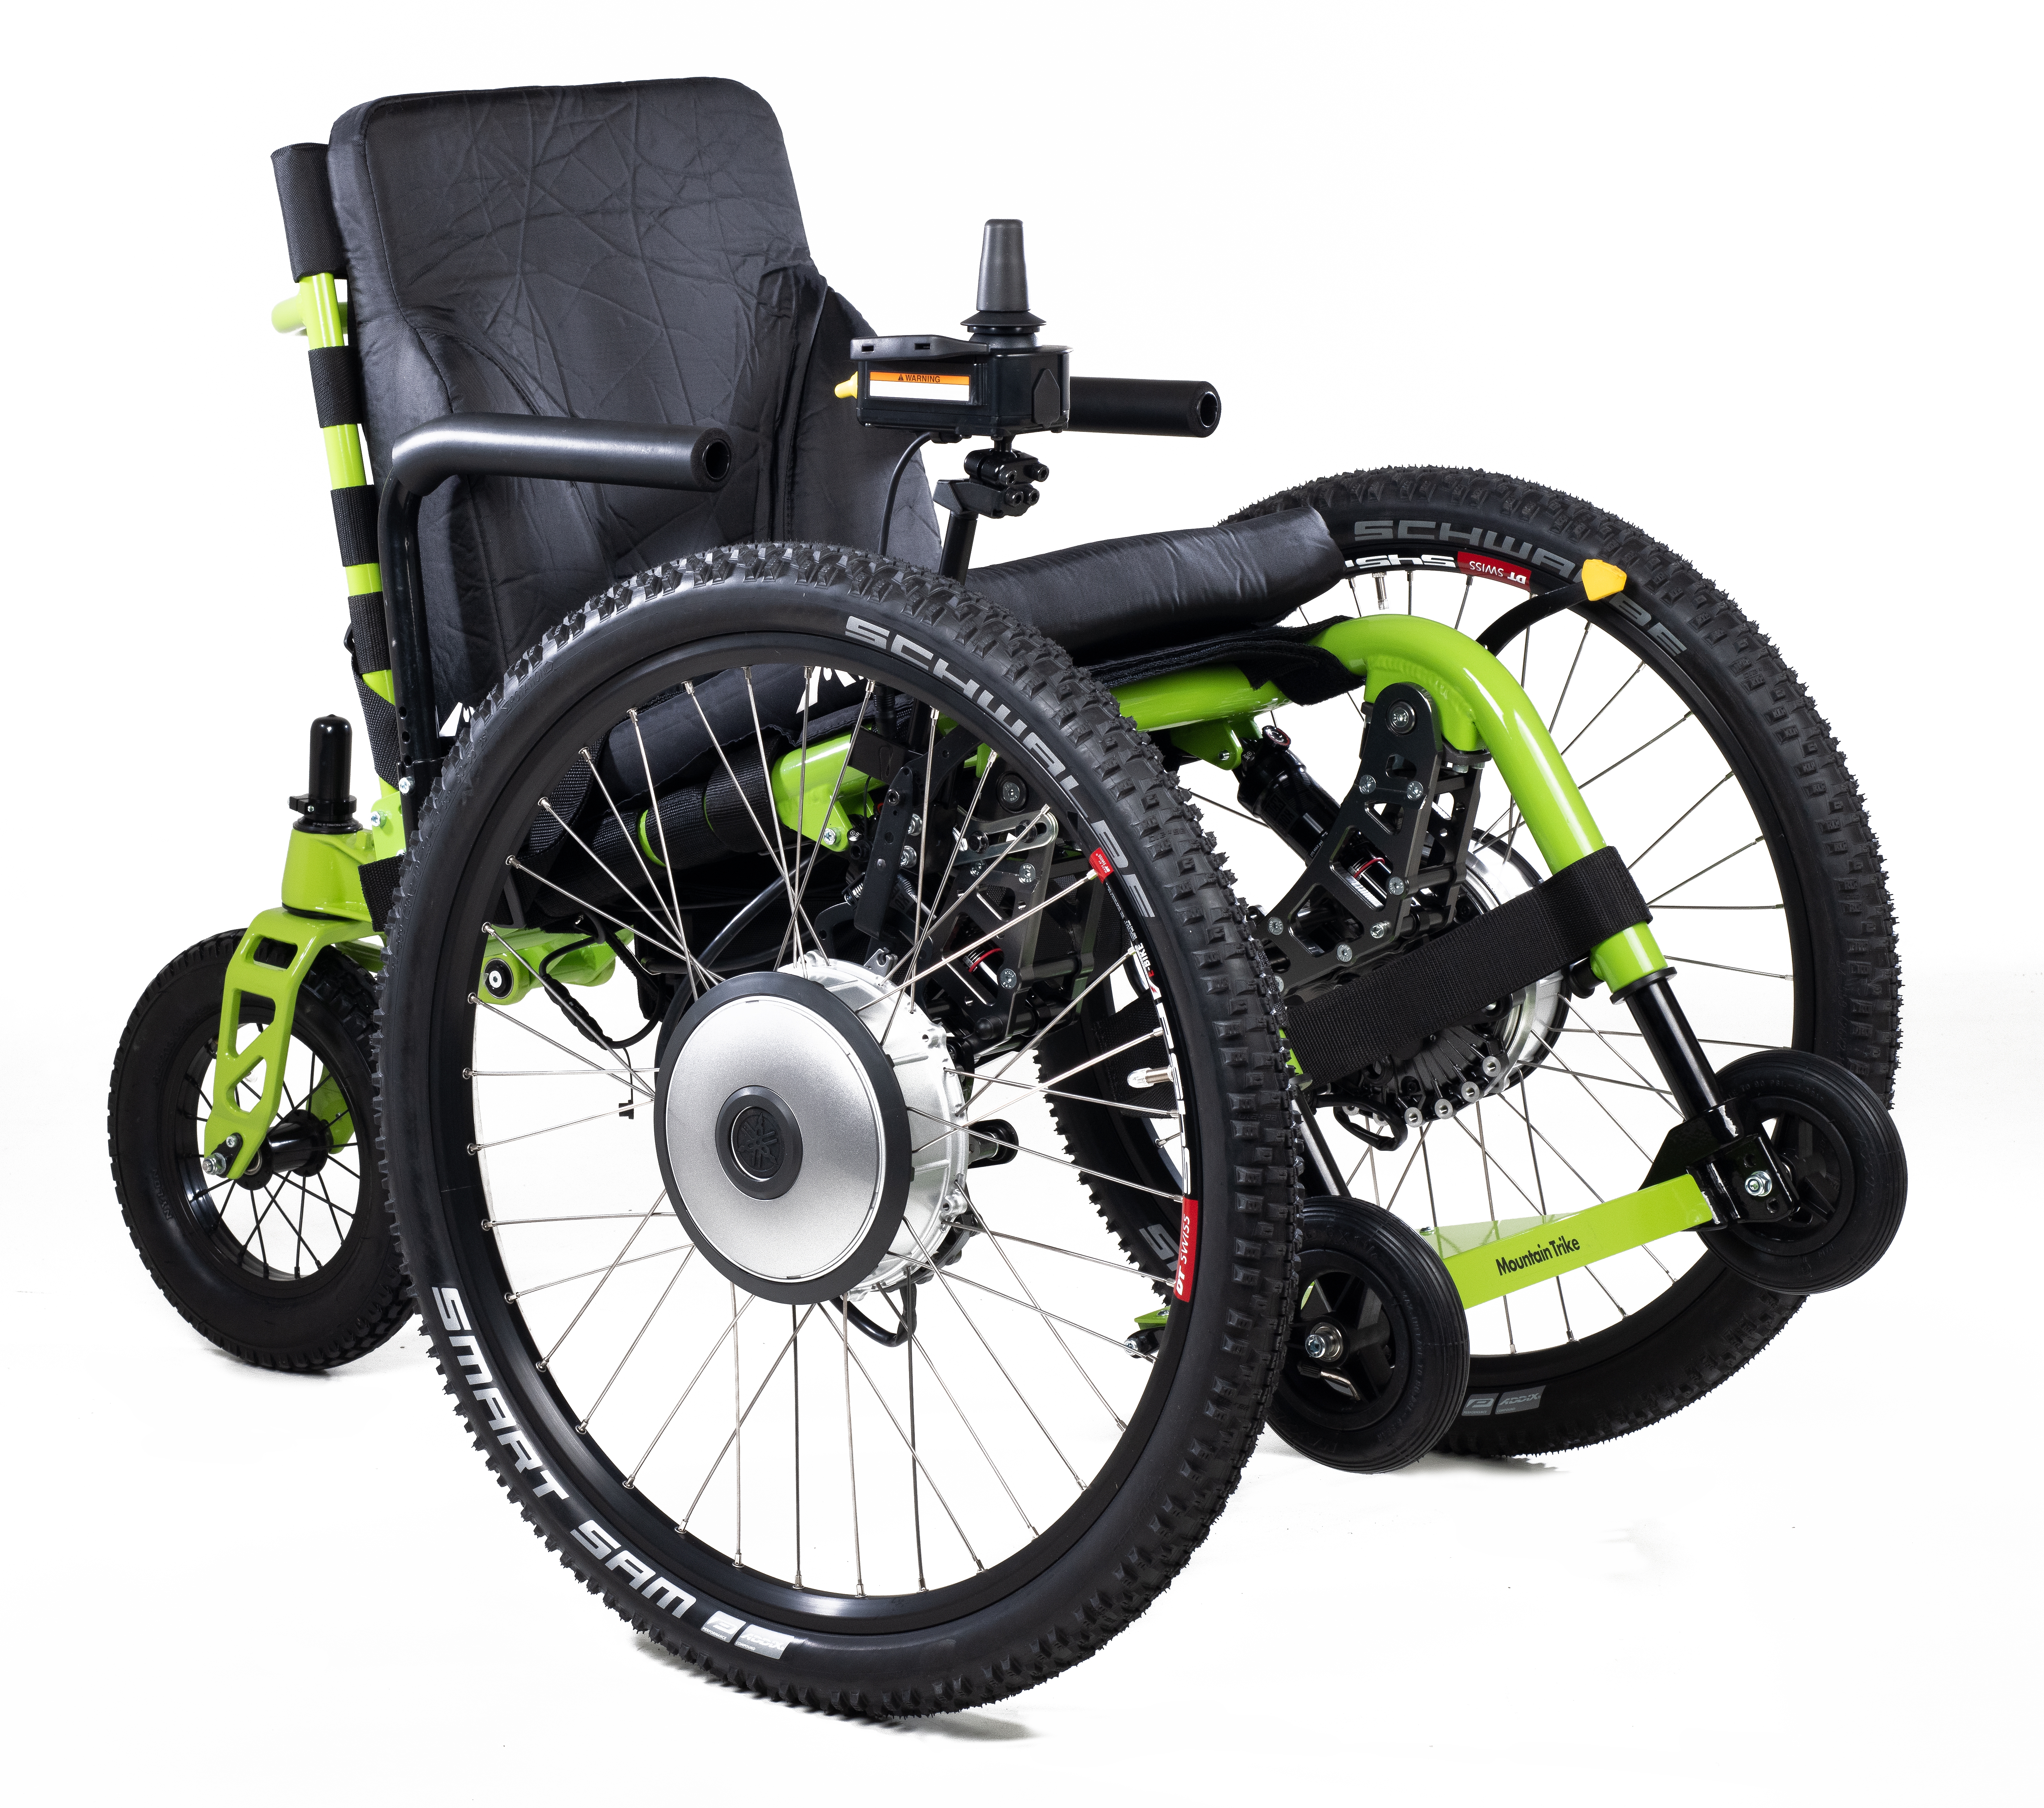 Full power for Mountain Trike all terrain wheelchair